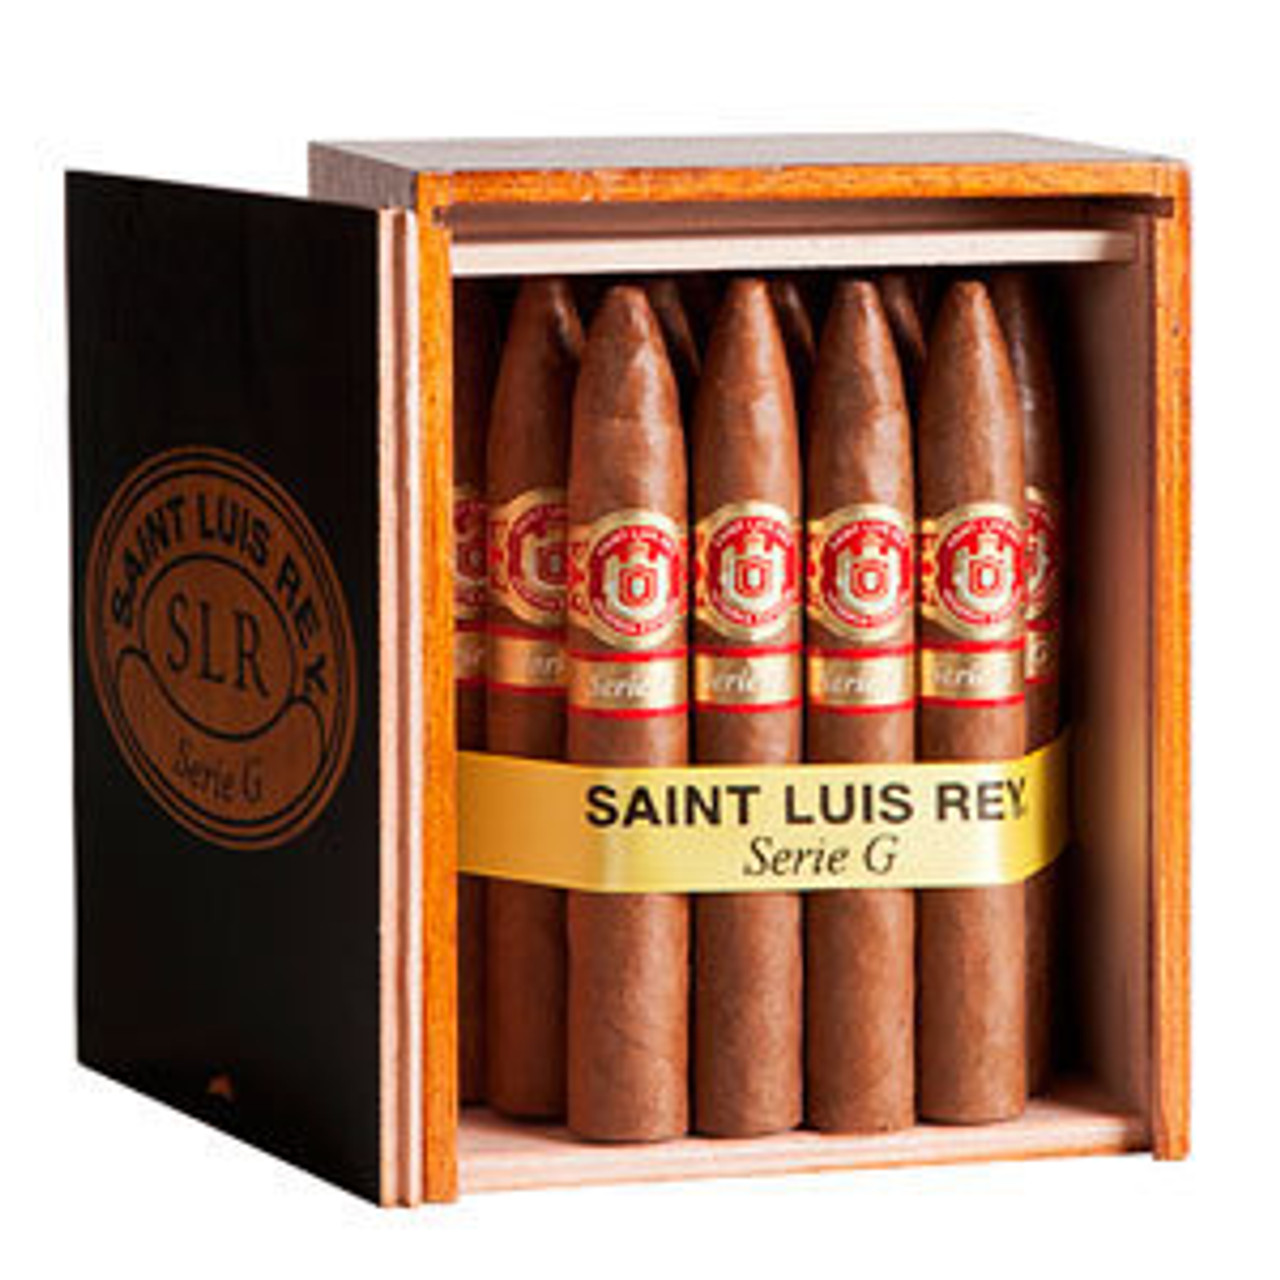 Saint Luis Rey Serie G Rothchilde Maduro Cigars - 5 x 56 (Box of 25) *Box